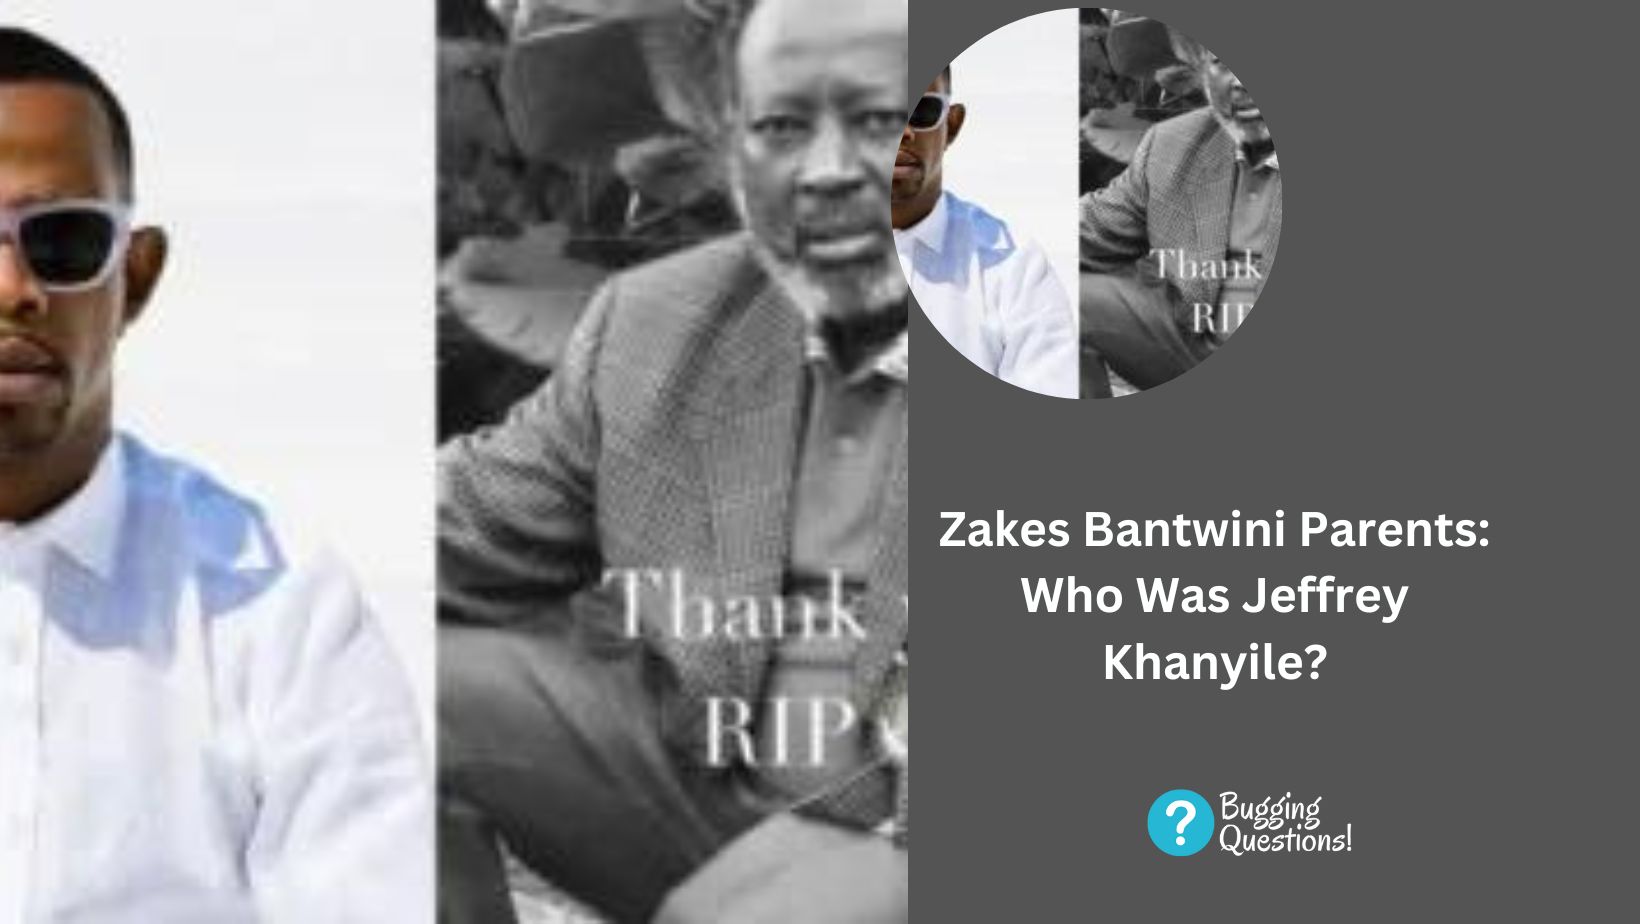 Zakes Bantwini Parents: Who Was Jeffrey Khanyile?